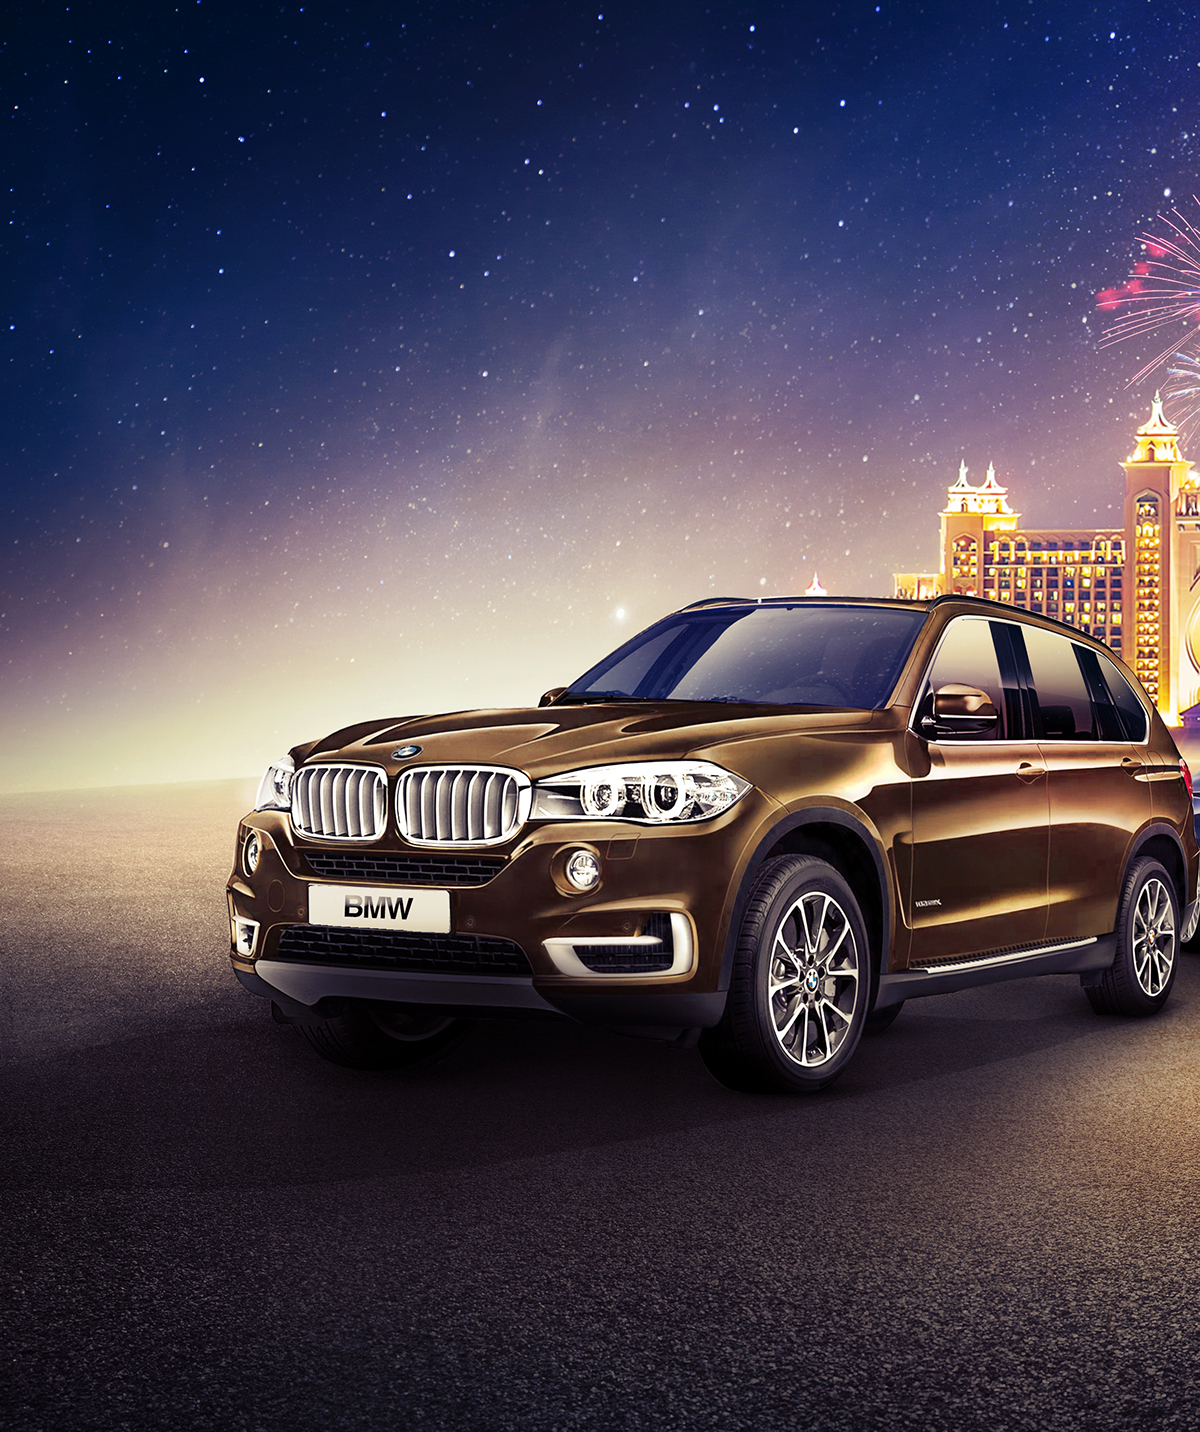 new year christimas dubai emirates BMW atlantis JBR gulf road fire works SKY yellow brown luxury ICON Advertising